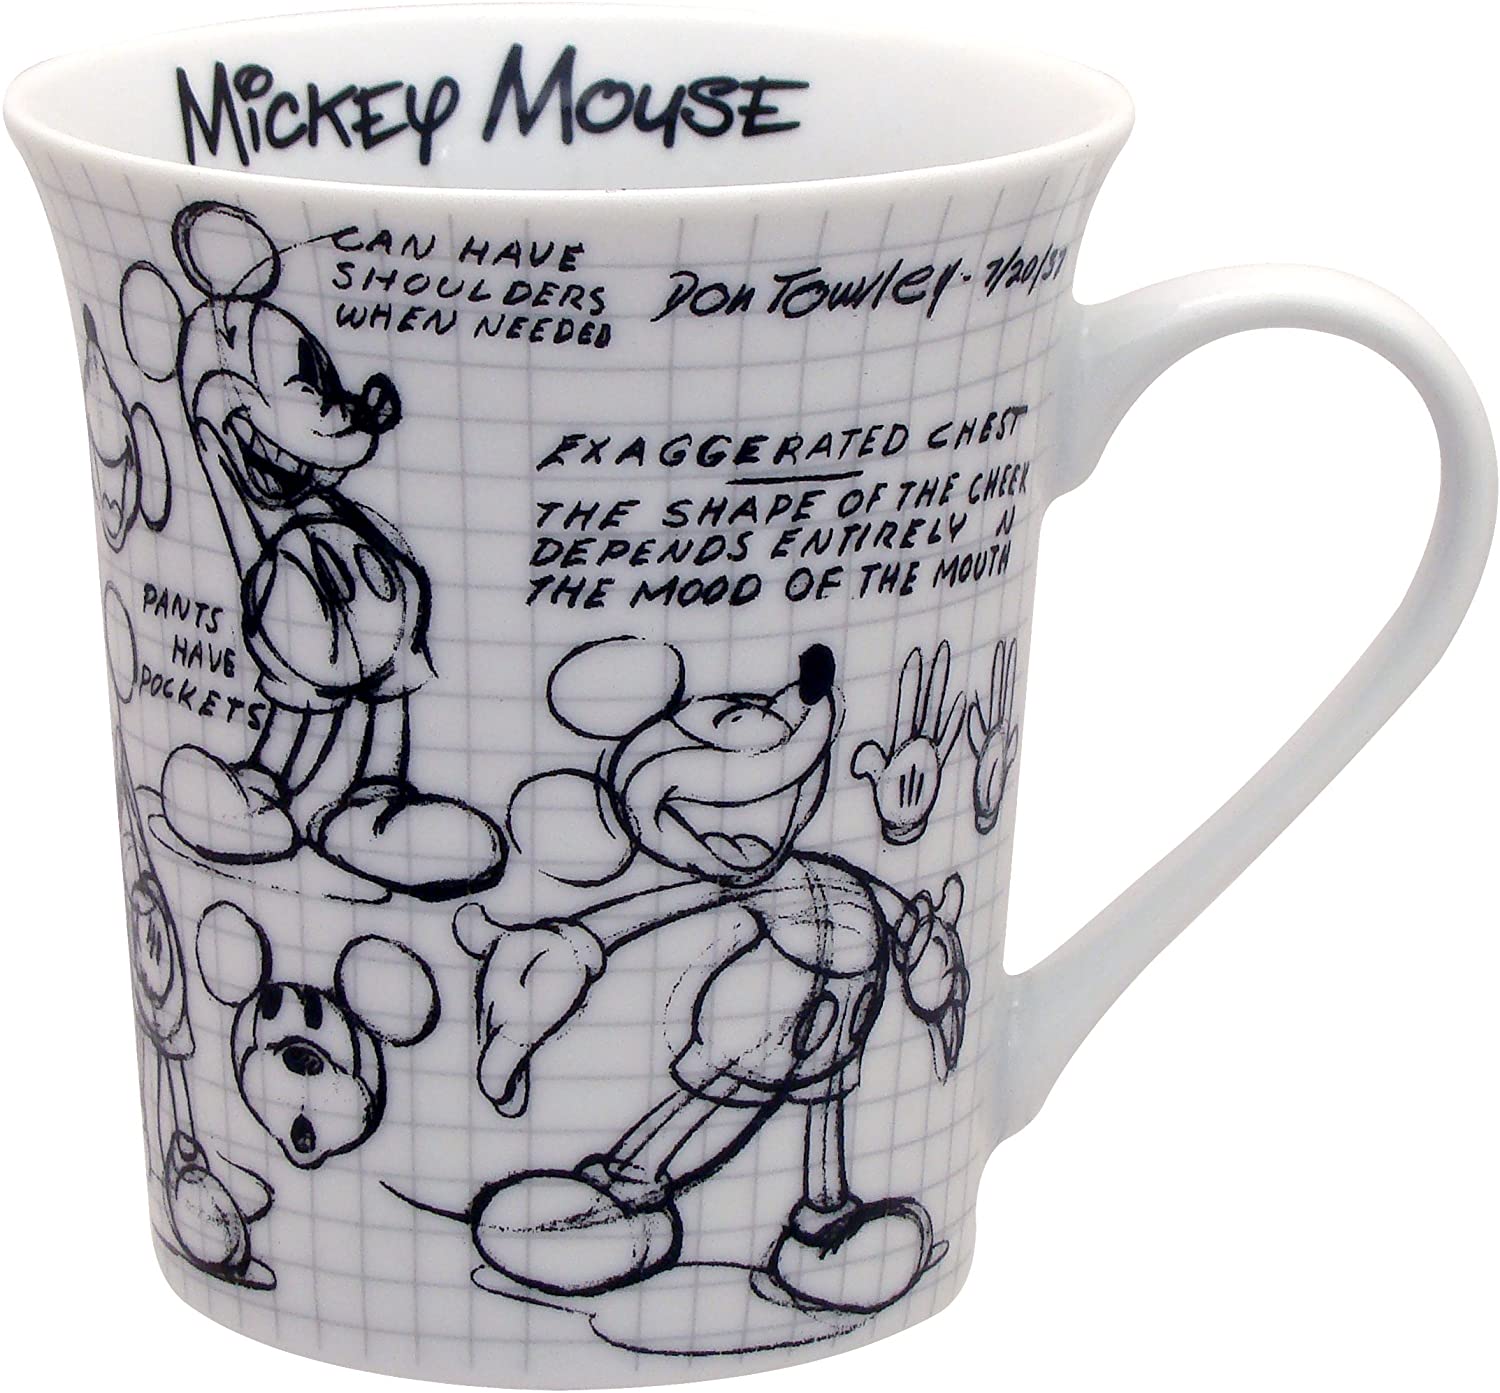 Disney 100 authentic 2022 Mickey minnie Mouse Mug cup disneyland